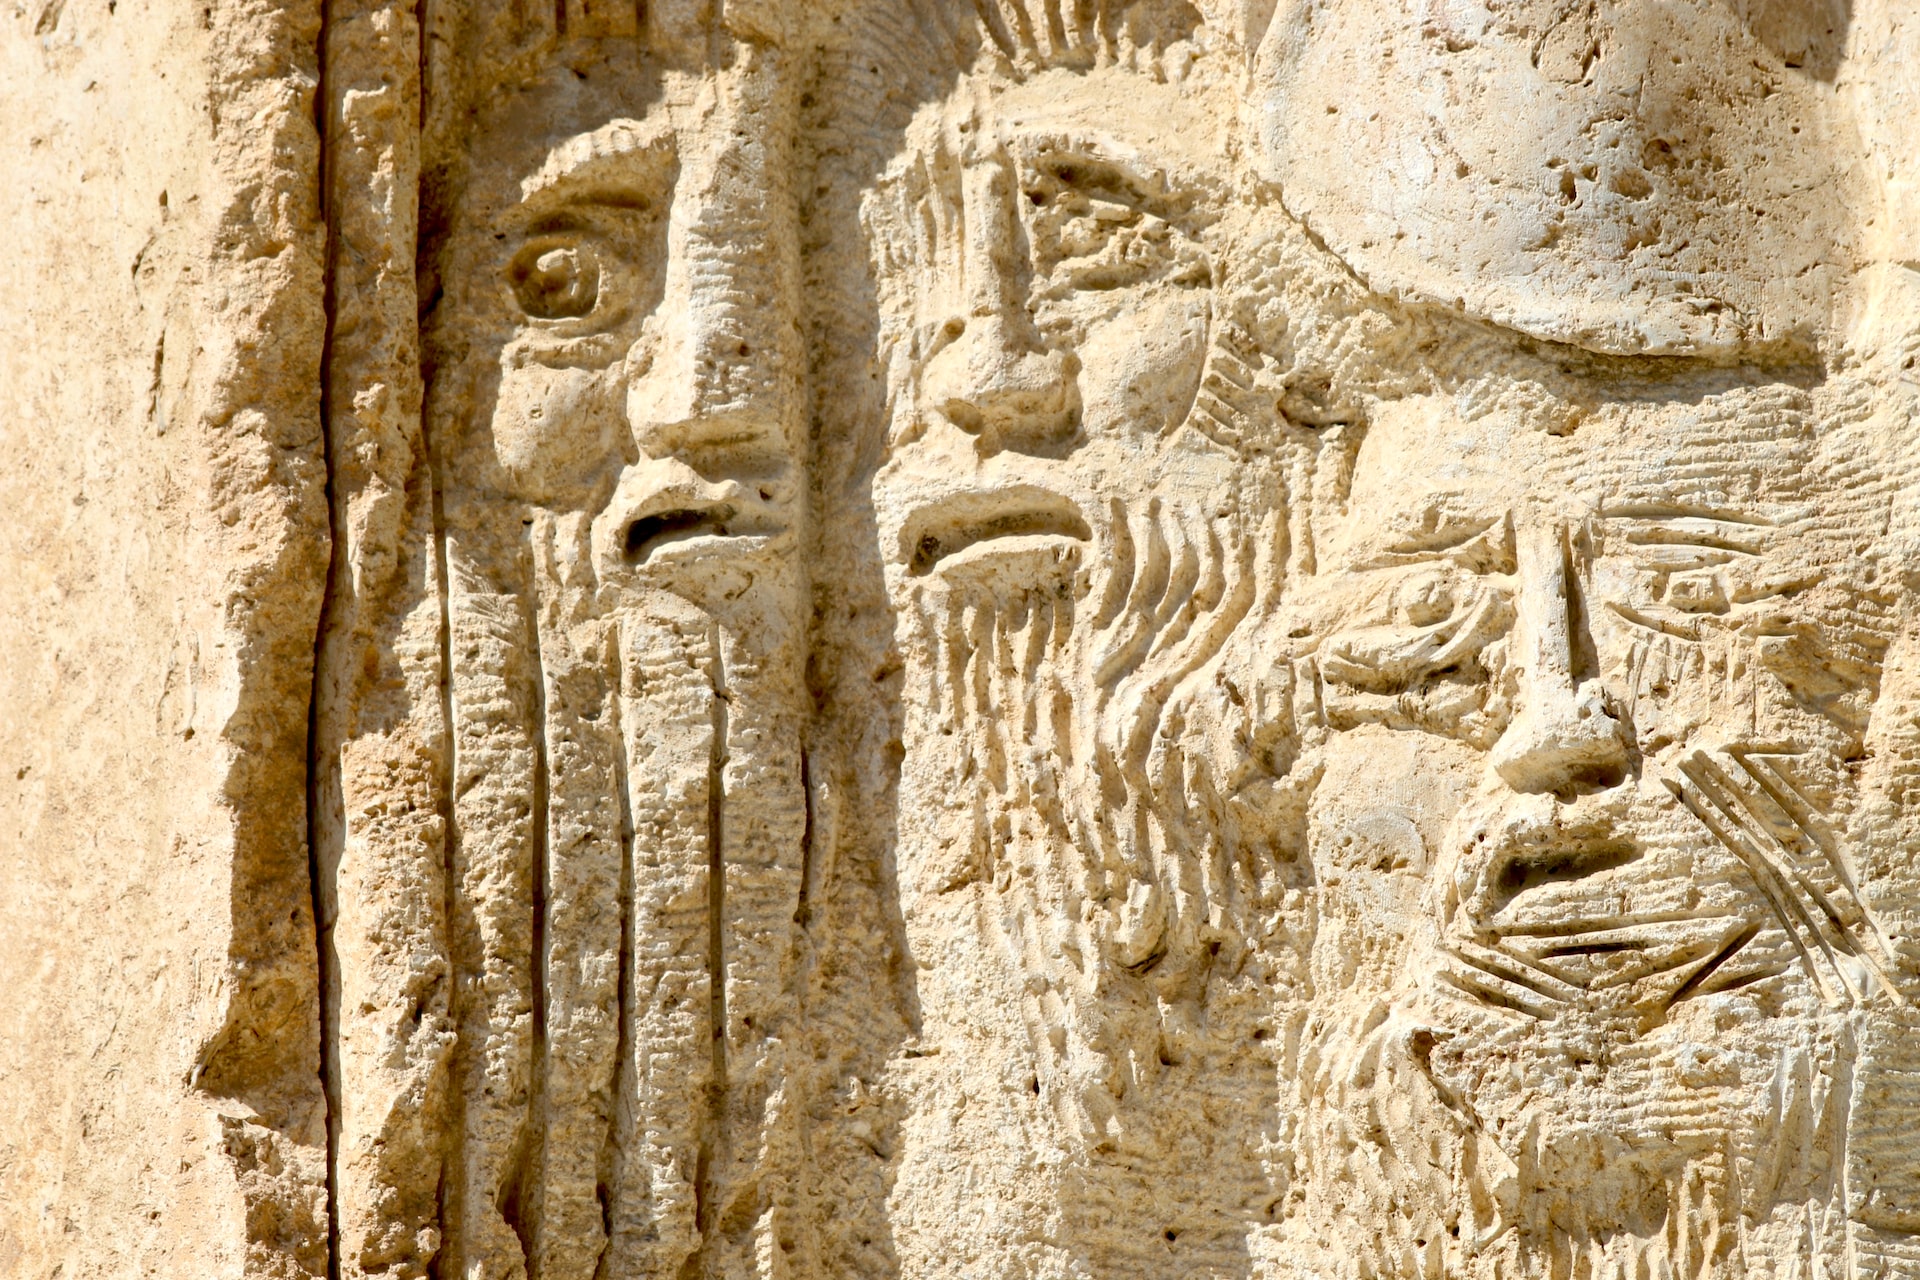 Discover the Ancient Kingdoms of Jordan